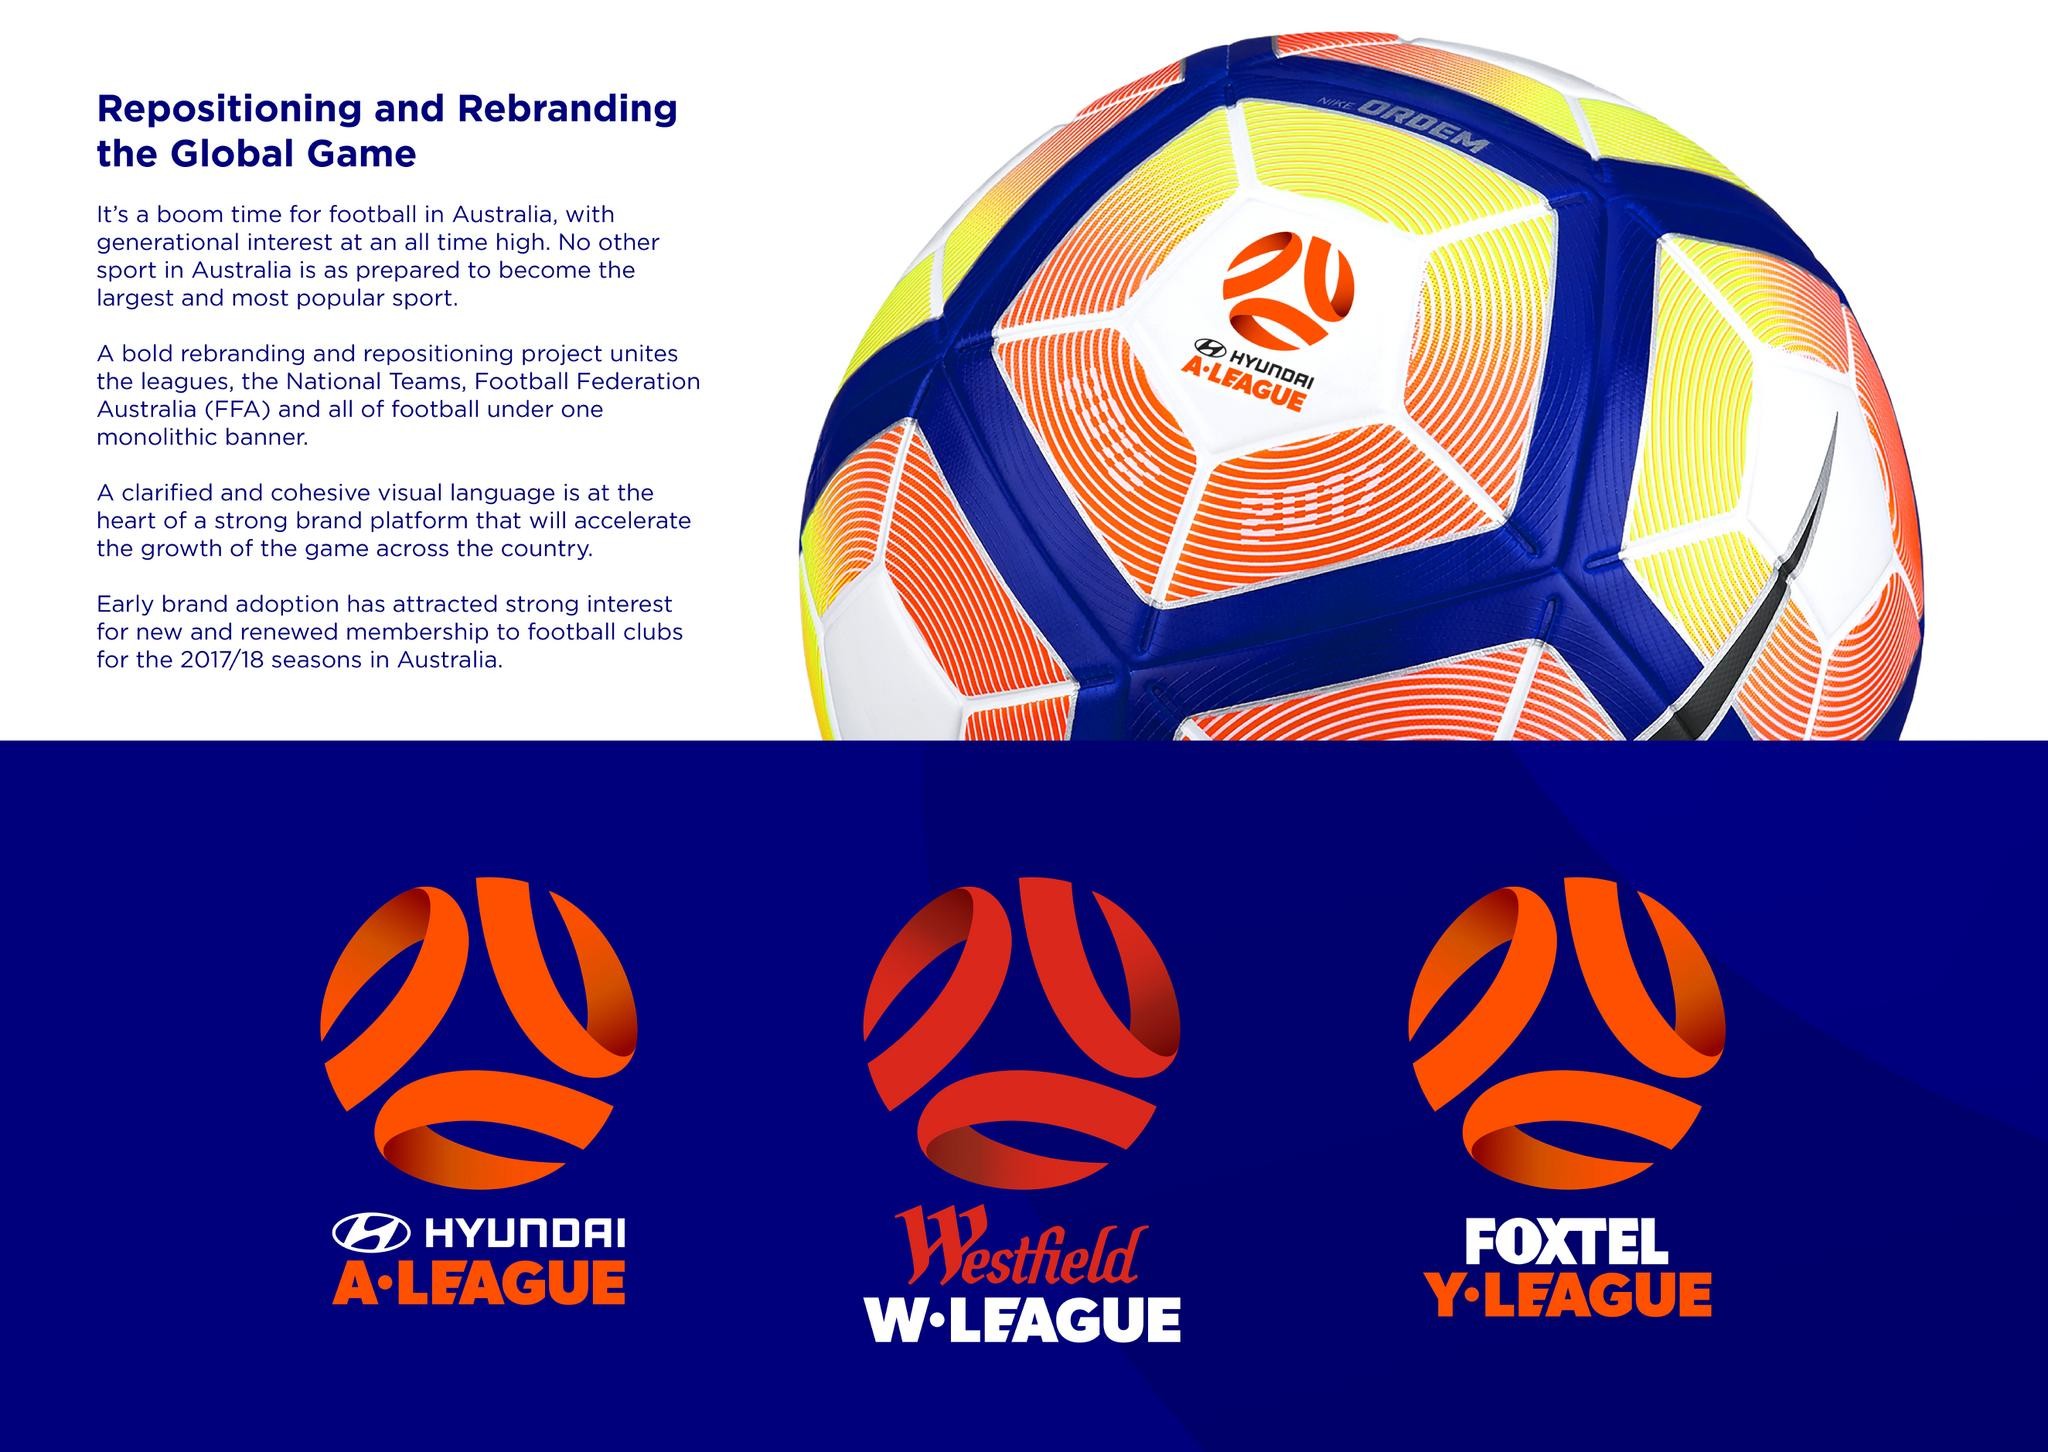 Repositioning and Rebranding Football in Australia